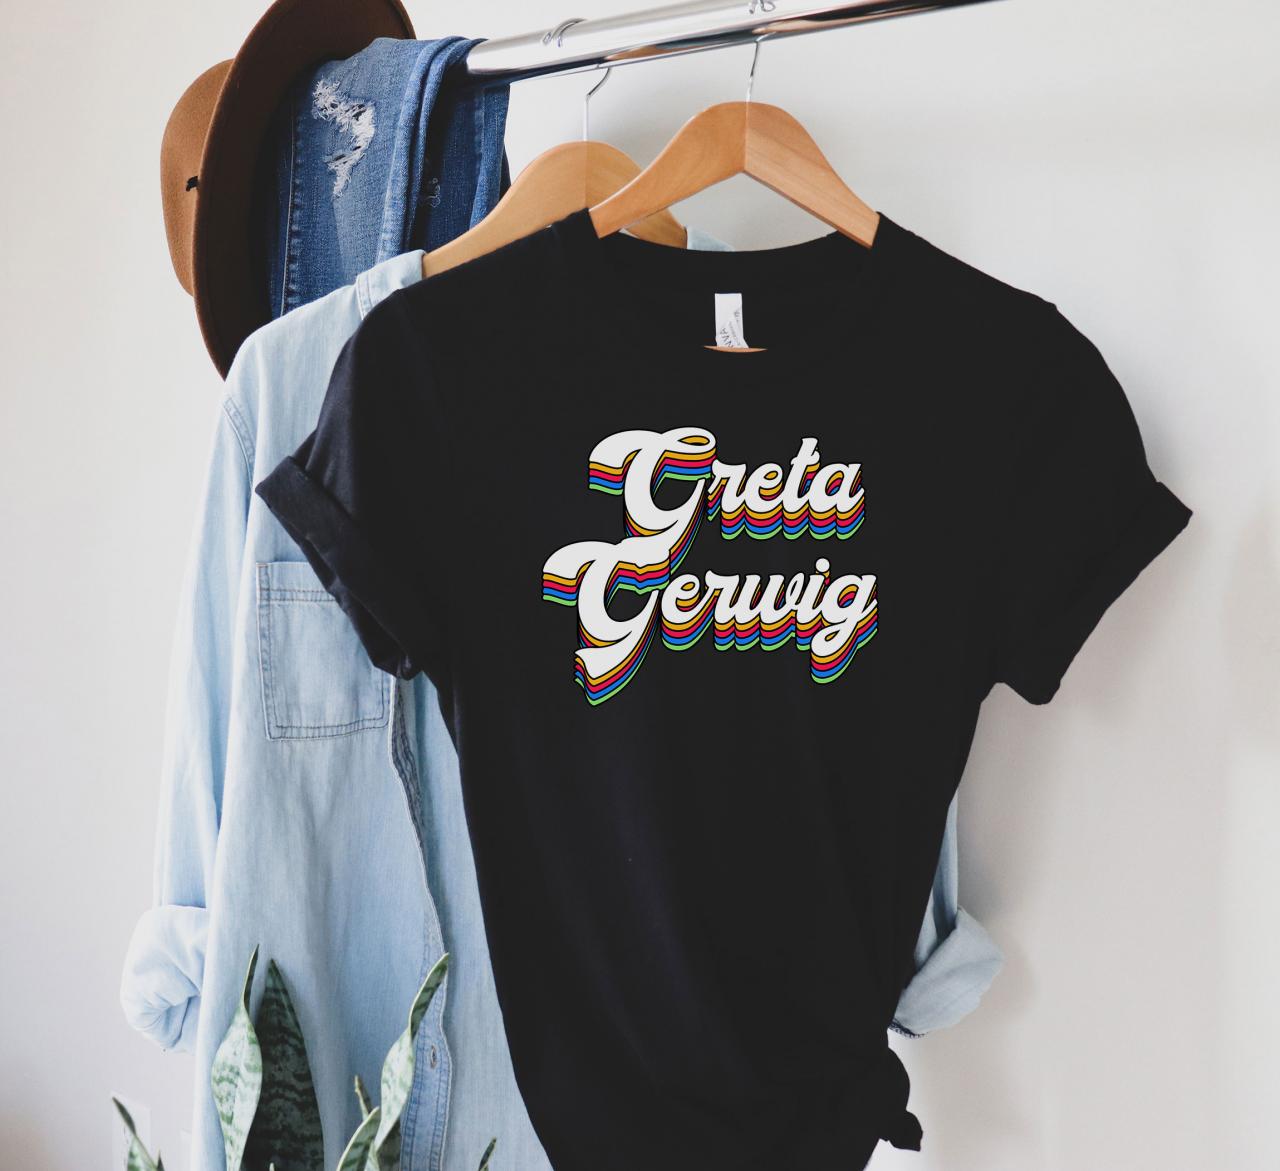 Greta Gerwig T-shirt, Greta Gerwig Shirt, Graphic Tee, Cinema Gift, Birthday Gift, Retro Tees, Vintage Gift, Trendy Shirt, Christmas Gift, Movie